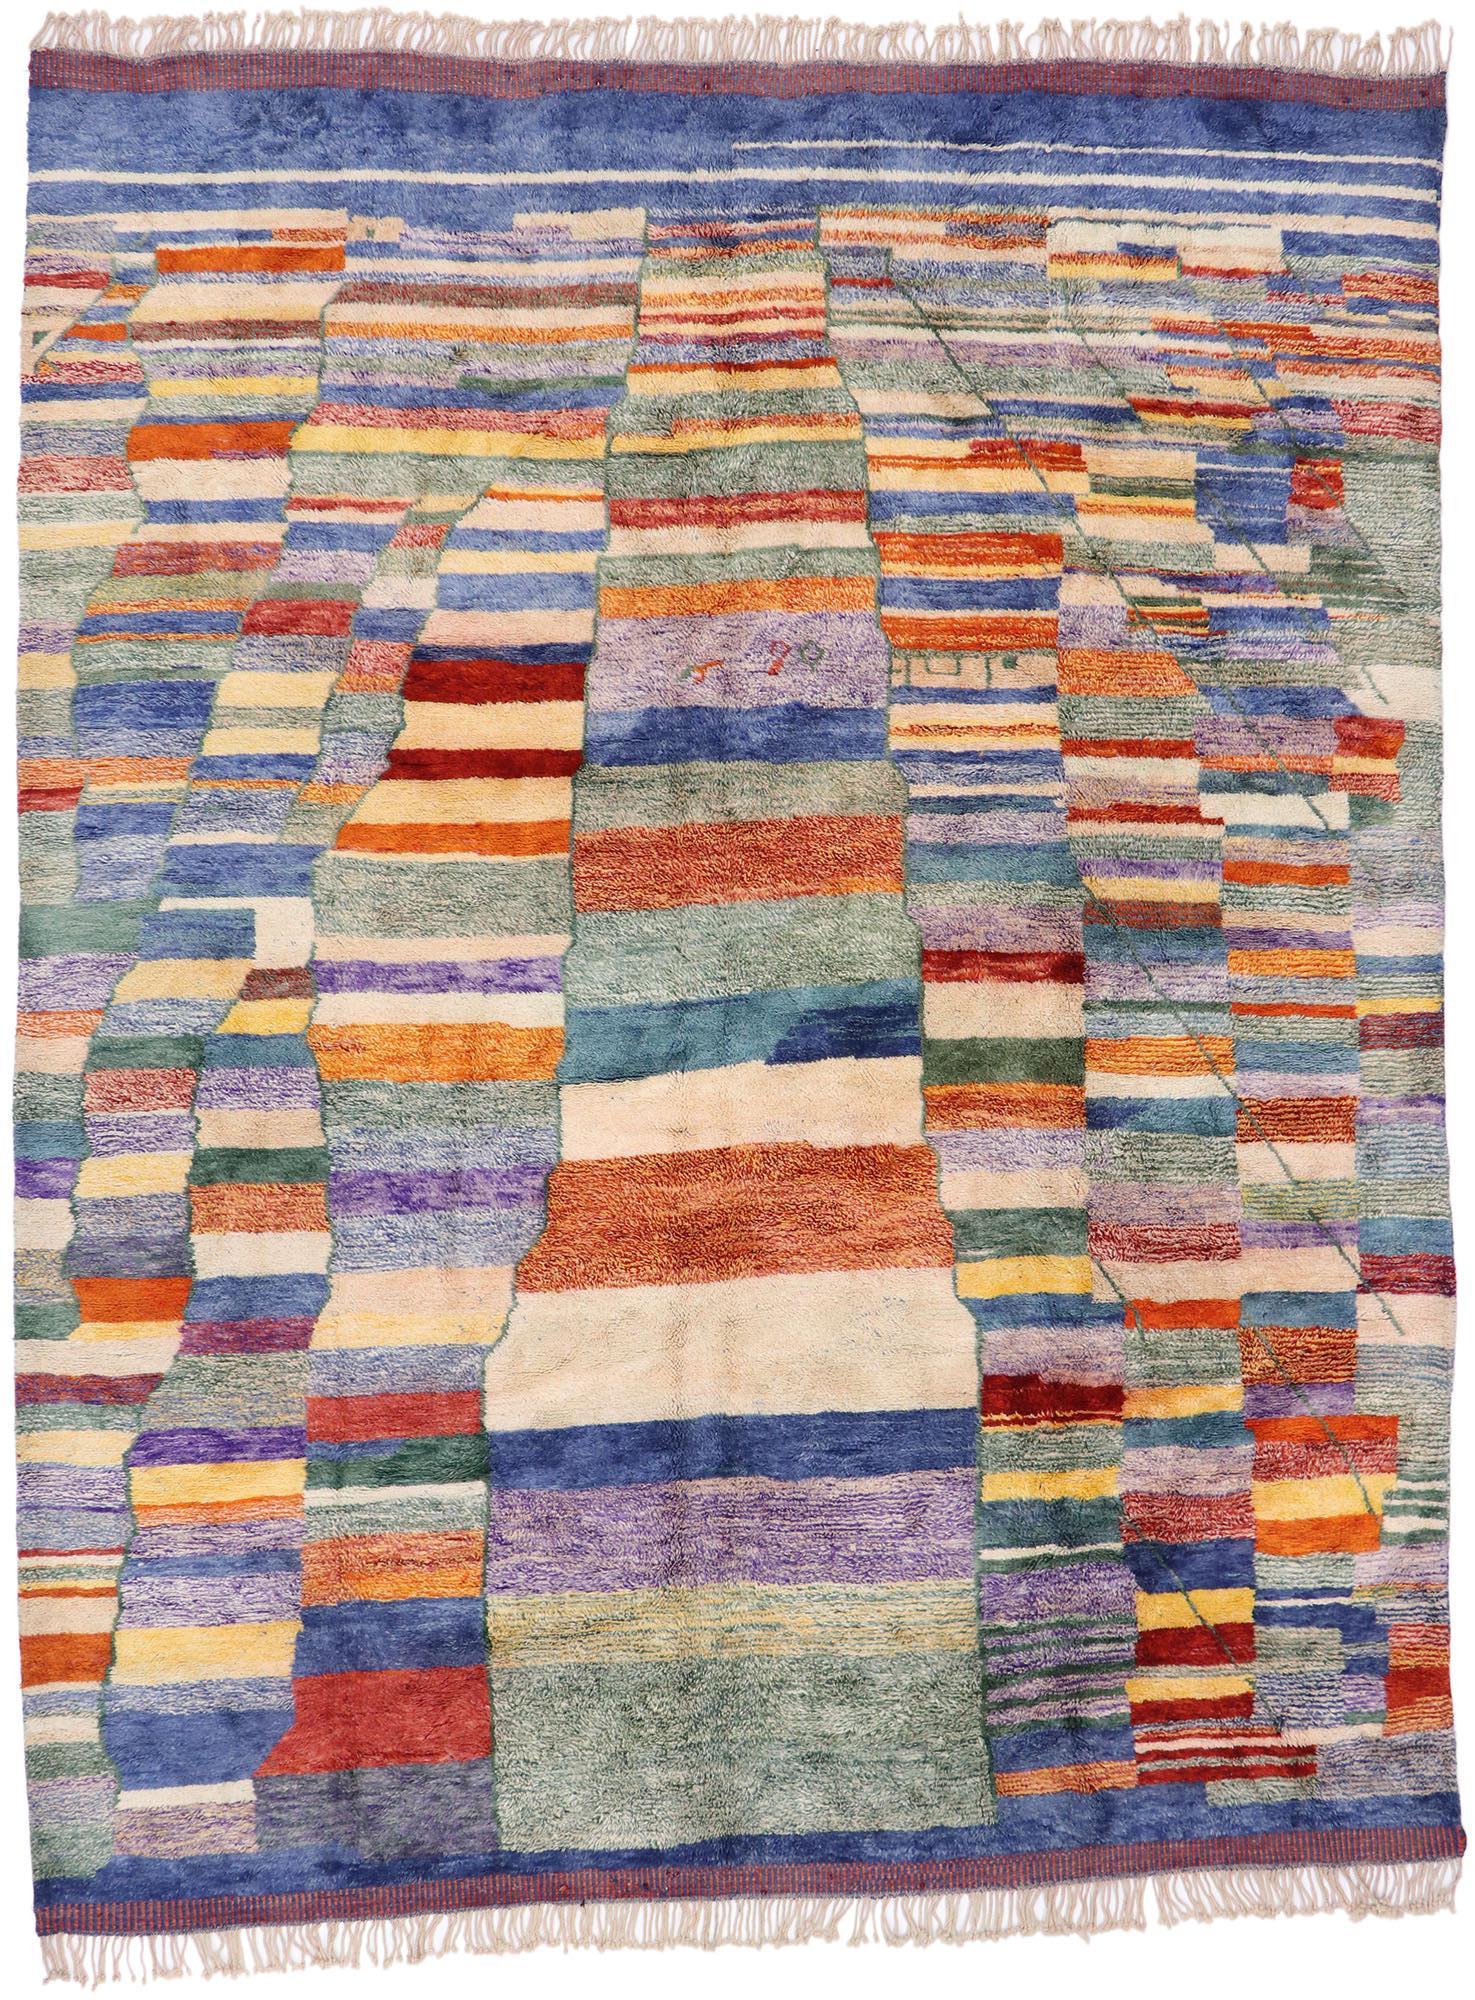 Berber Beni Mrirt Moroccan Rug Inspired by Paul Klee For Sale 1